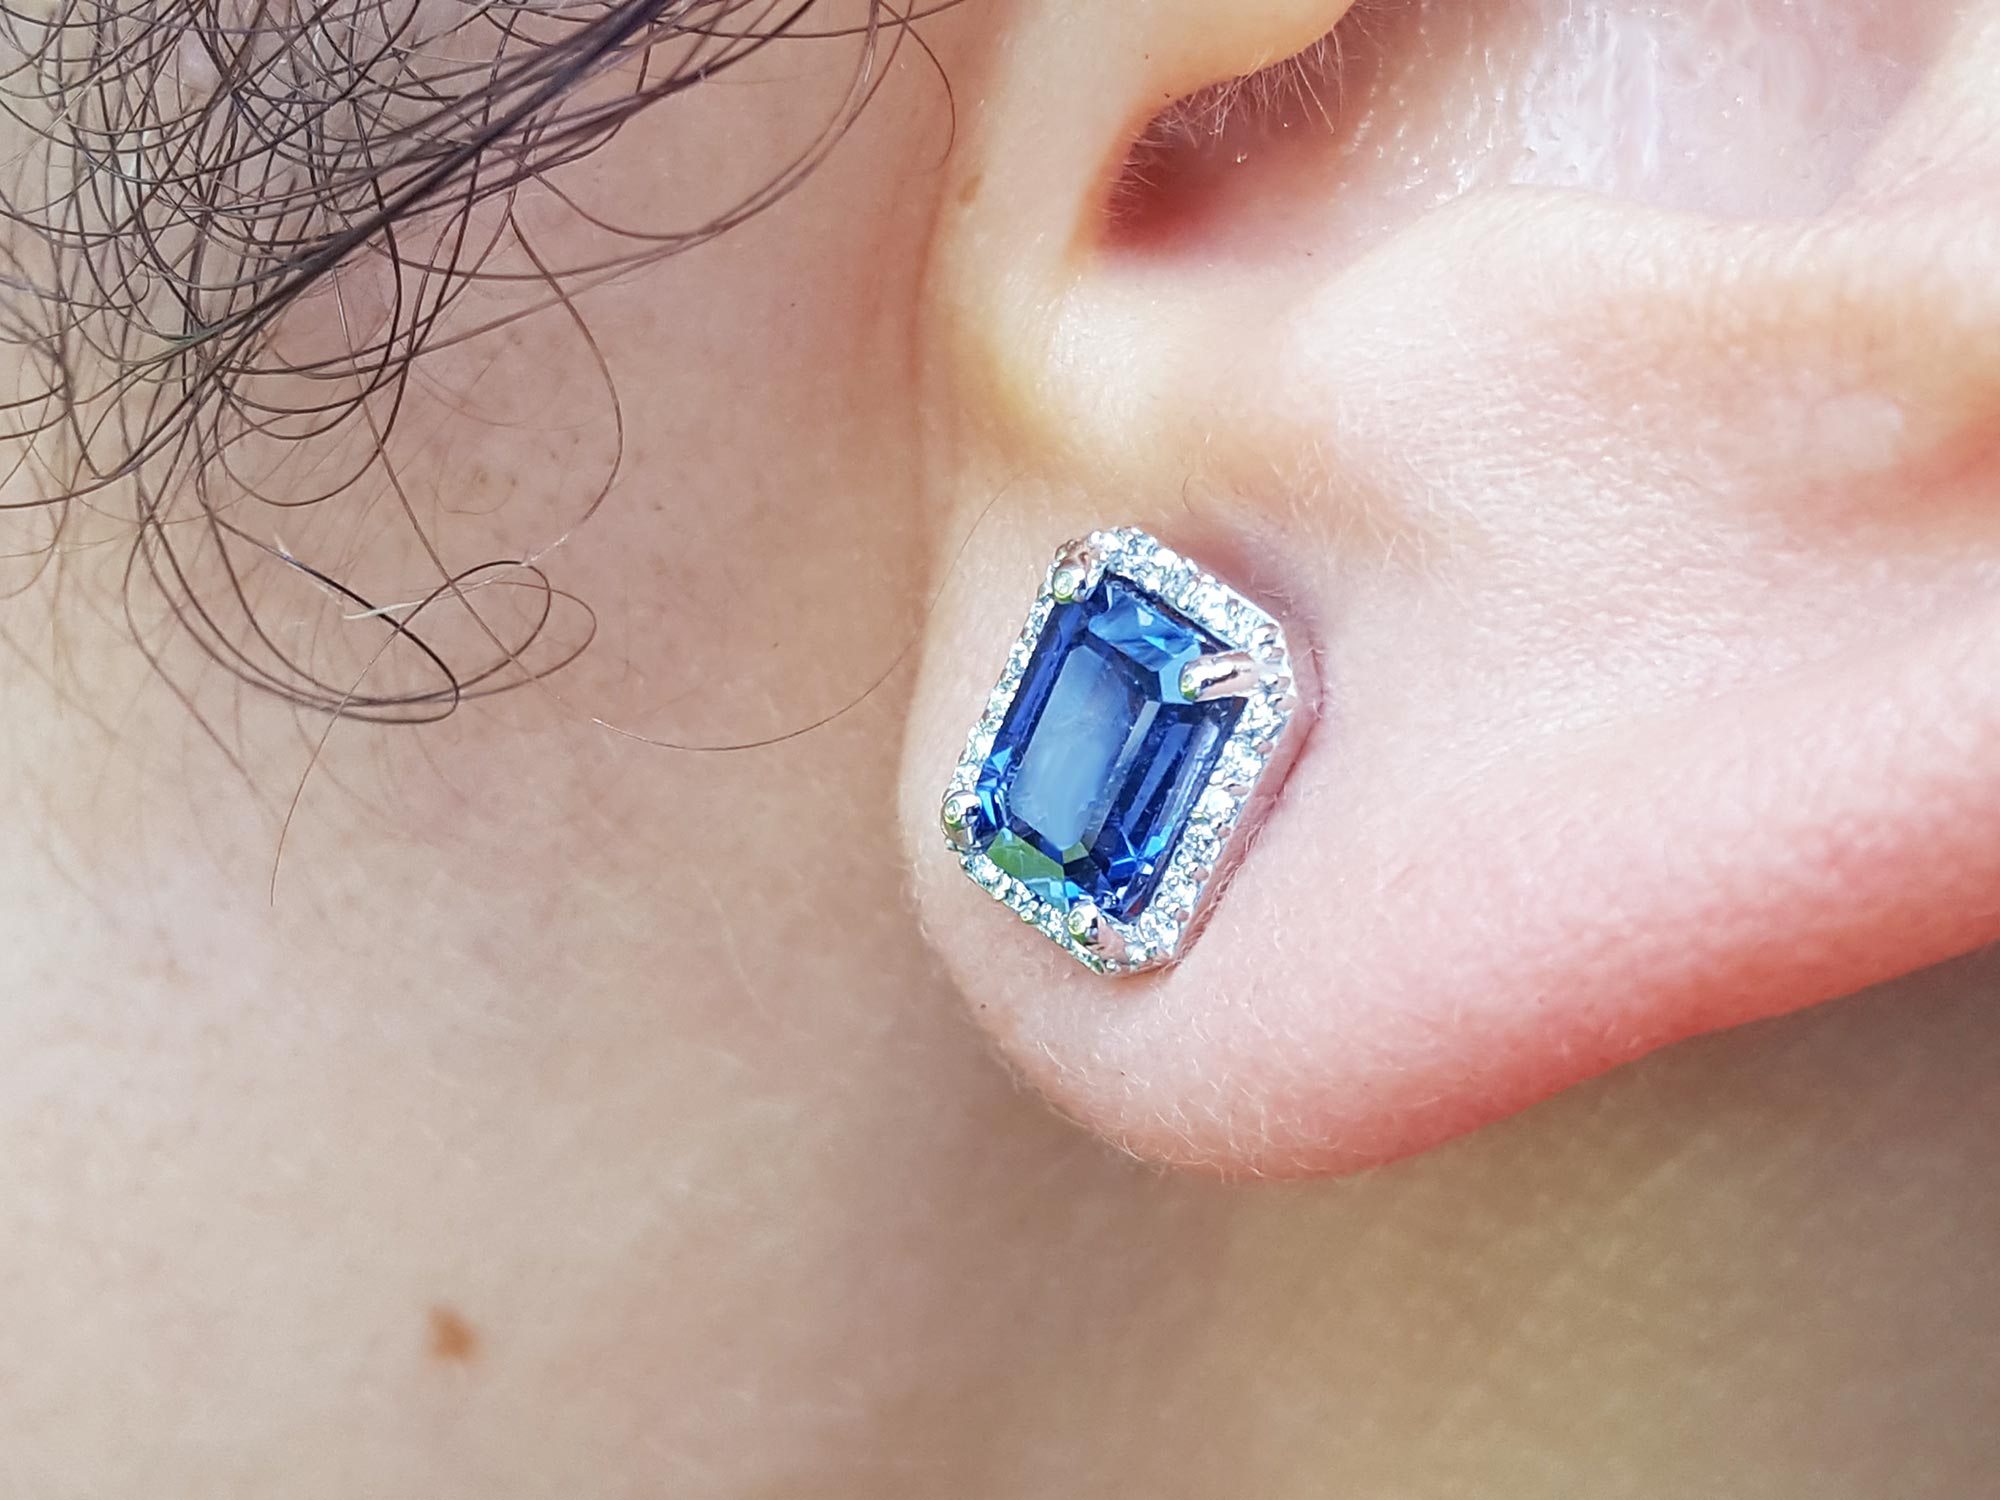 Sapphire and diamond jewelry